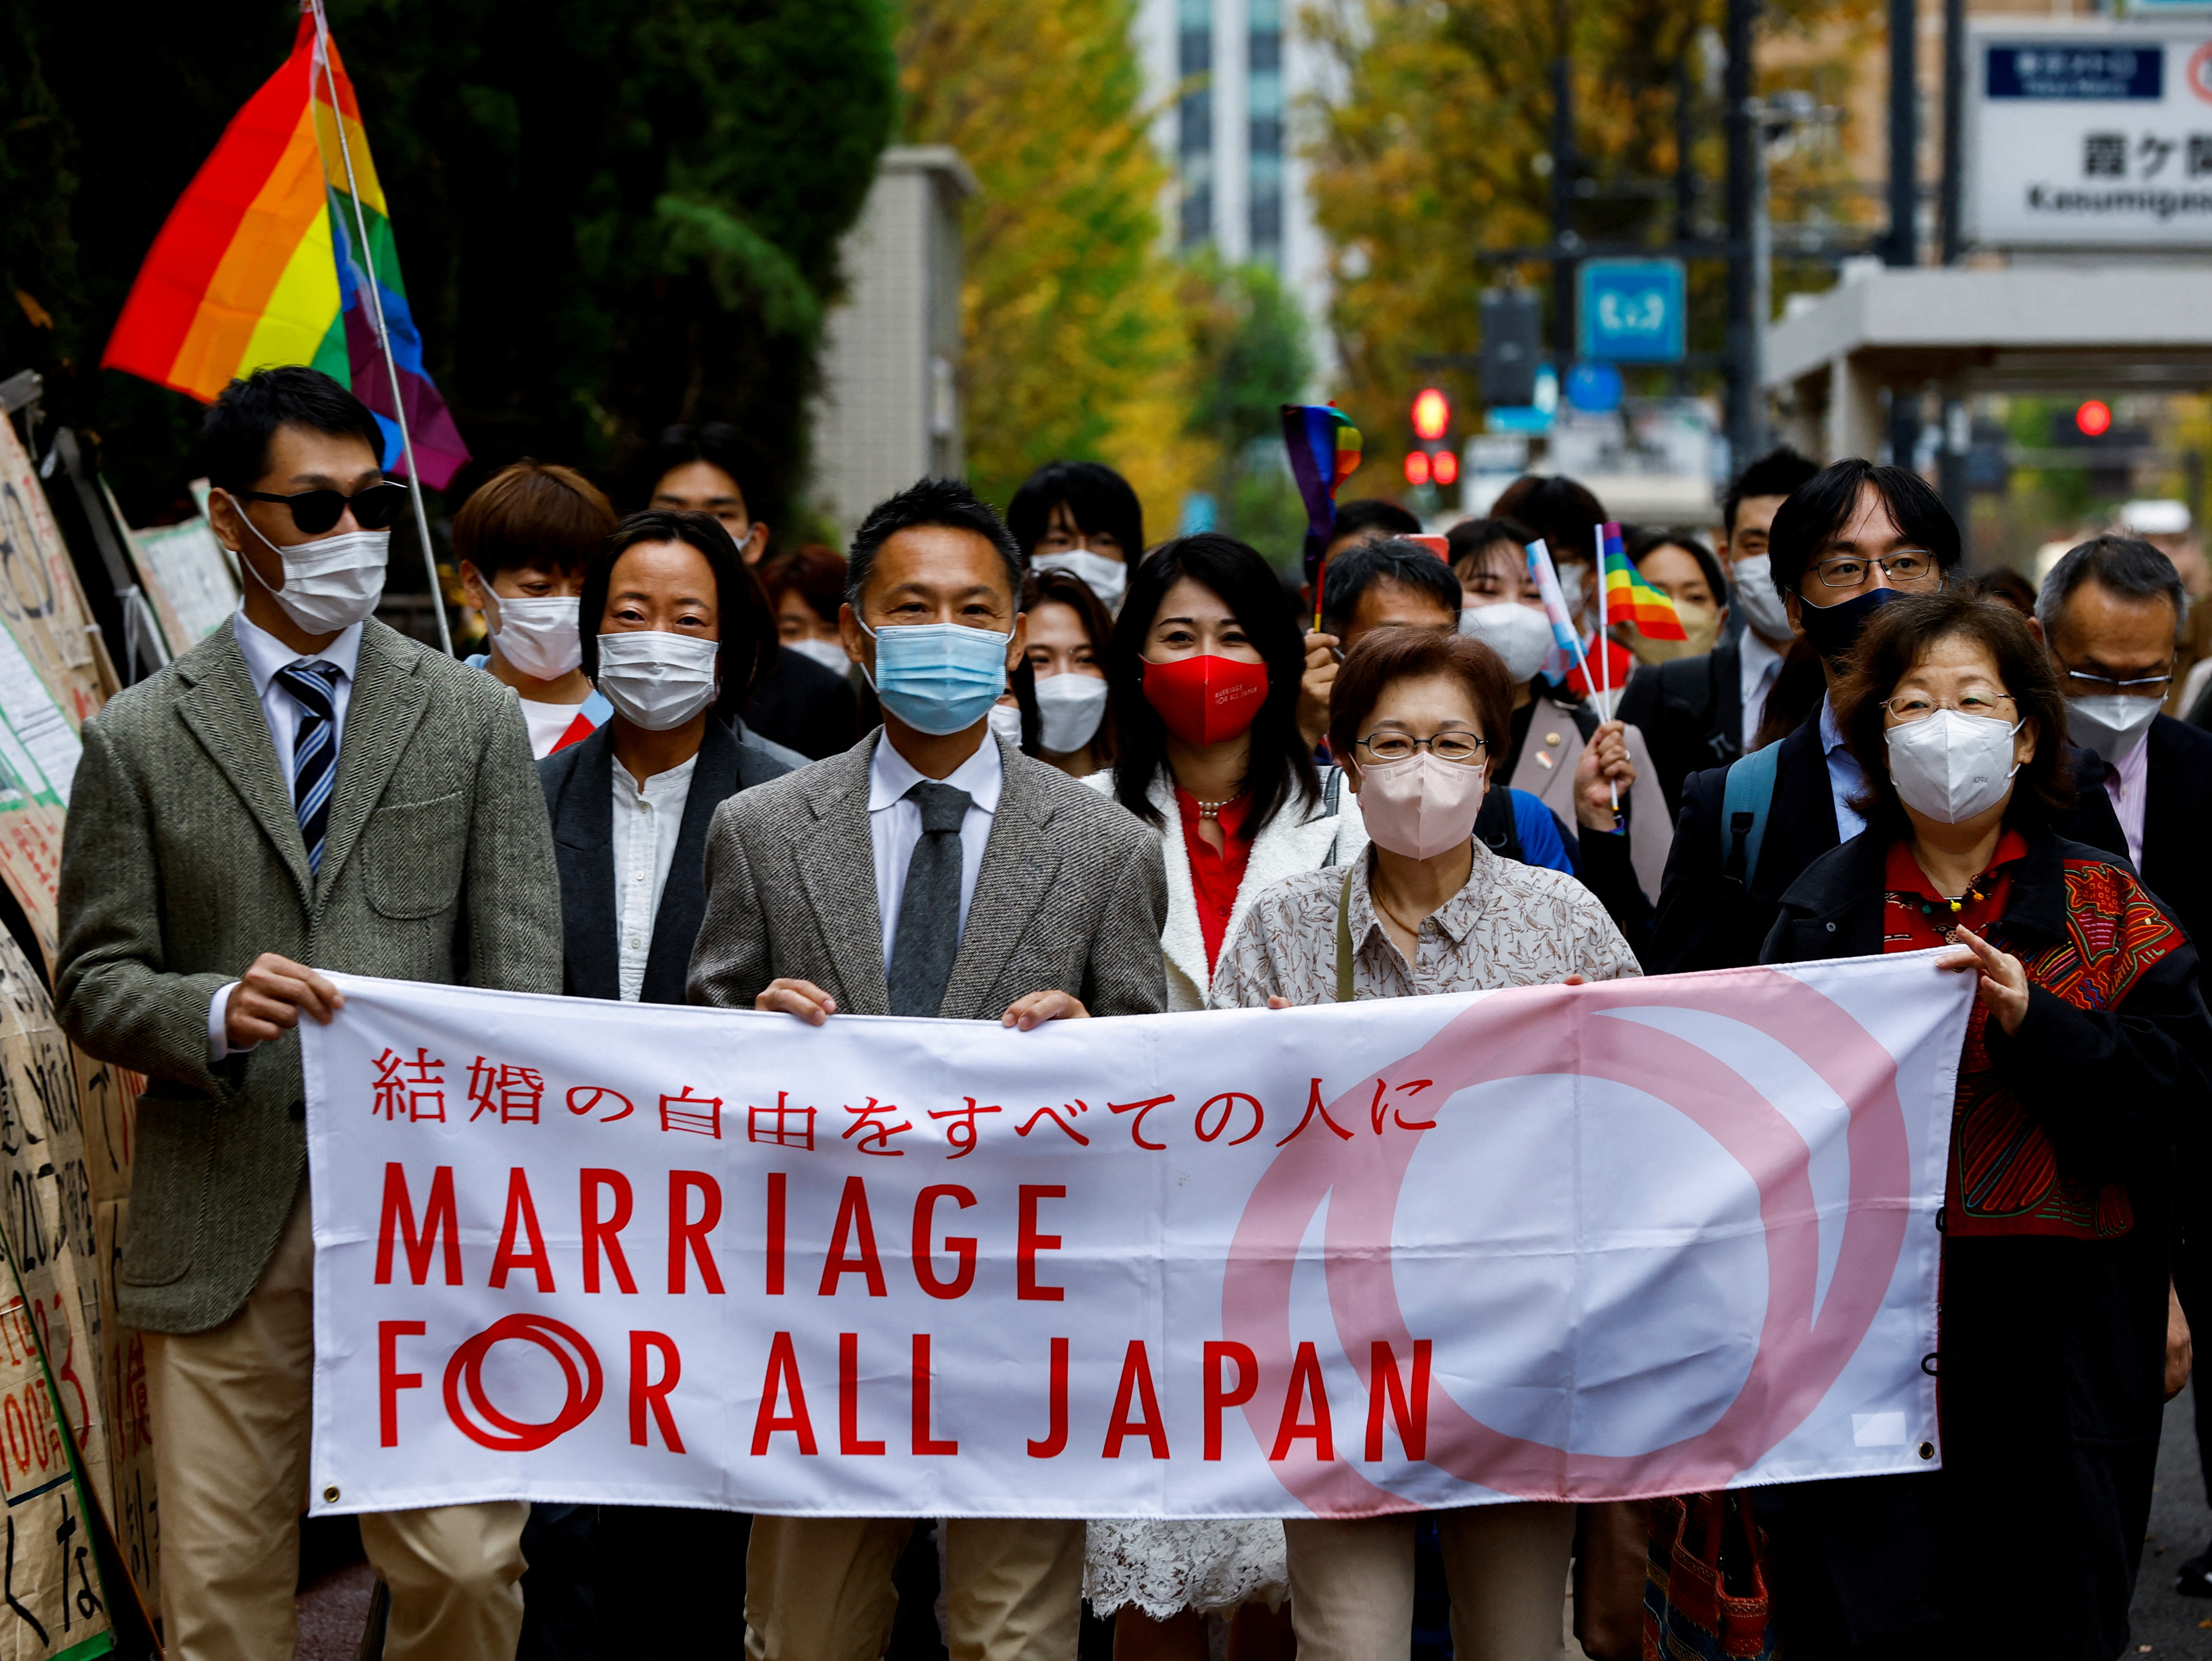 Most Japanese favour recognising same-sex marriage - survey | Reuters